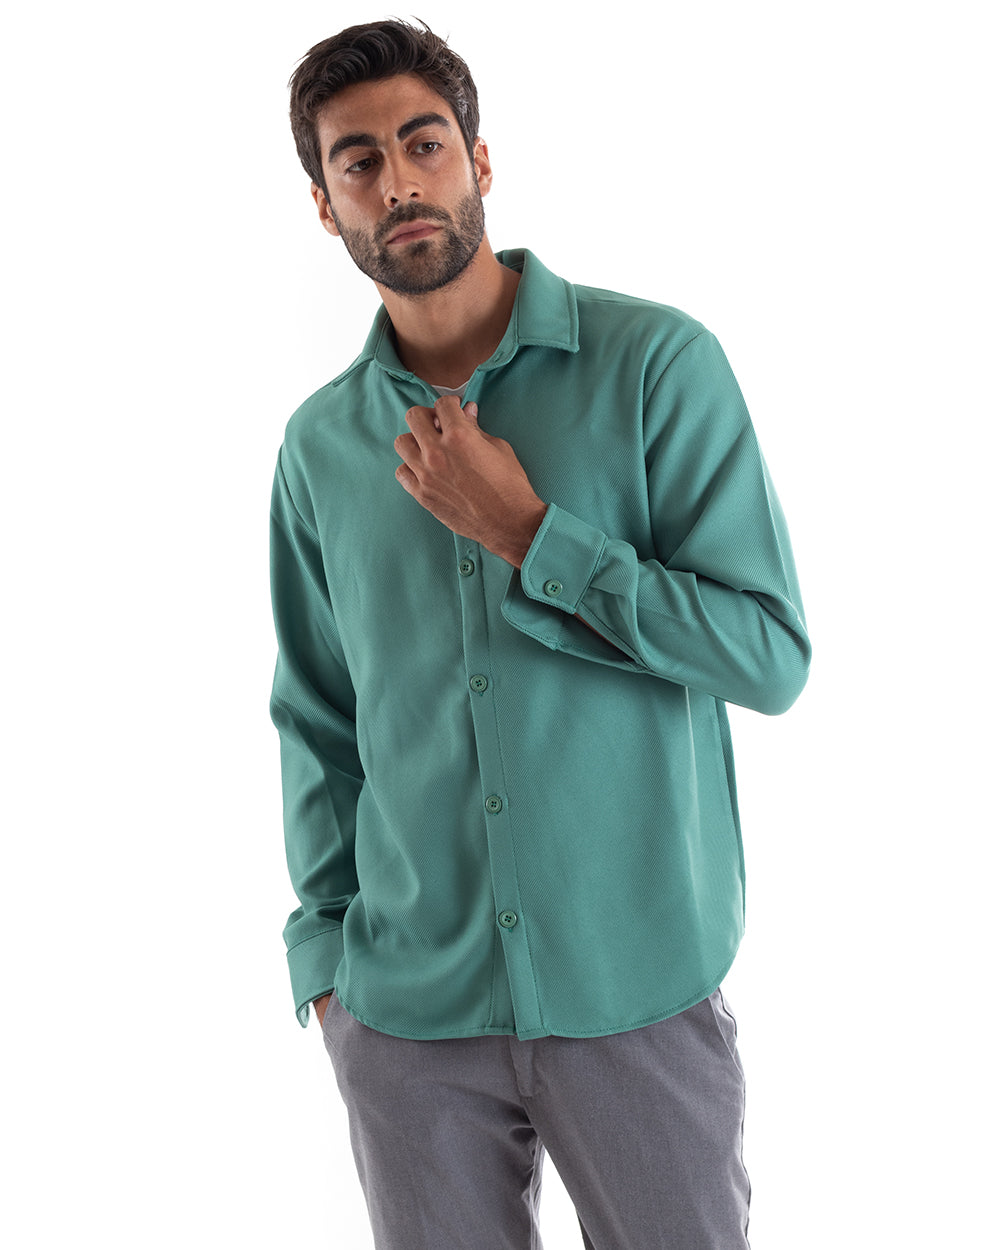 Men's Shirt With Collar Long Sleeves Plain Cotton Petrol GIOSAL-C2463A